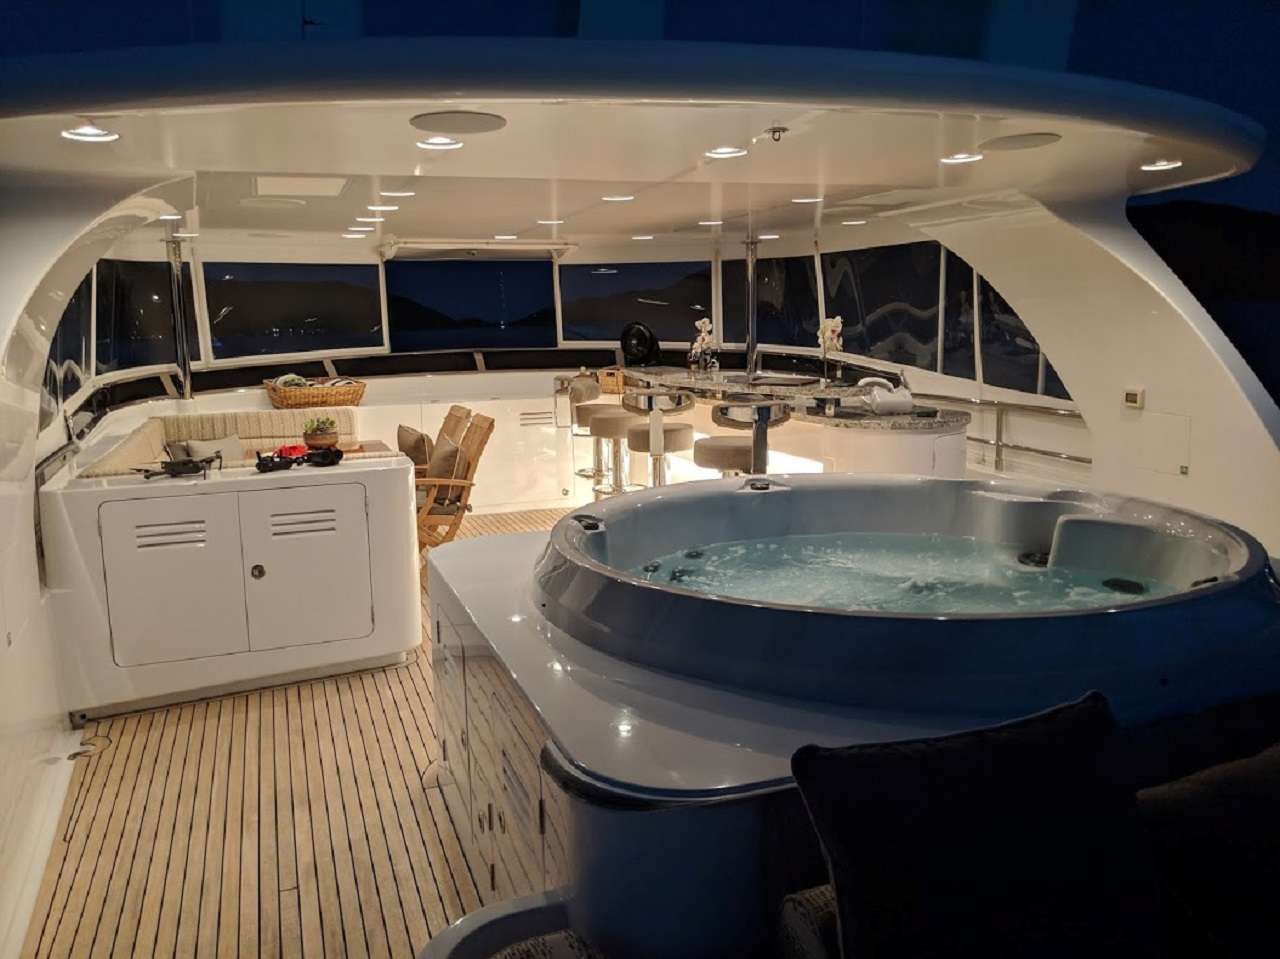 Motor Yacht 'VIVIERAE II' Top deck, 10 PAX, 5 Crew, 98.00 Ft, 29.00 Meters, Built 2017, Nordhavn, Refit Year 2021